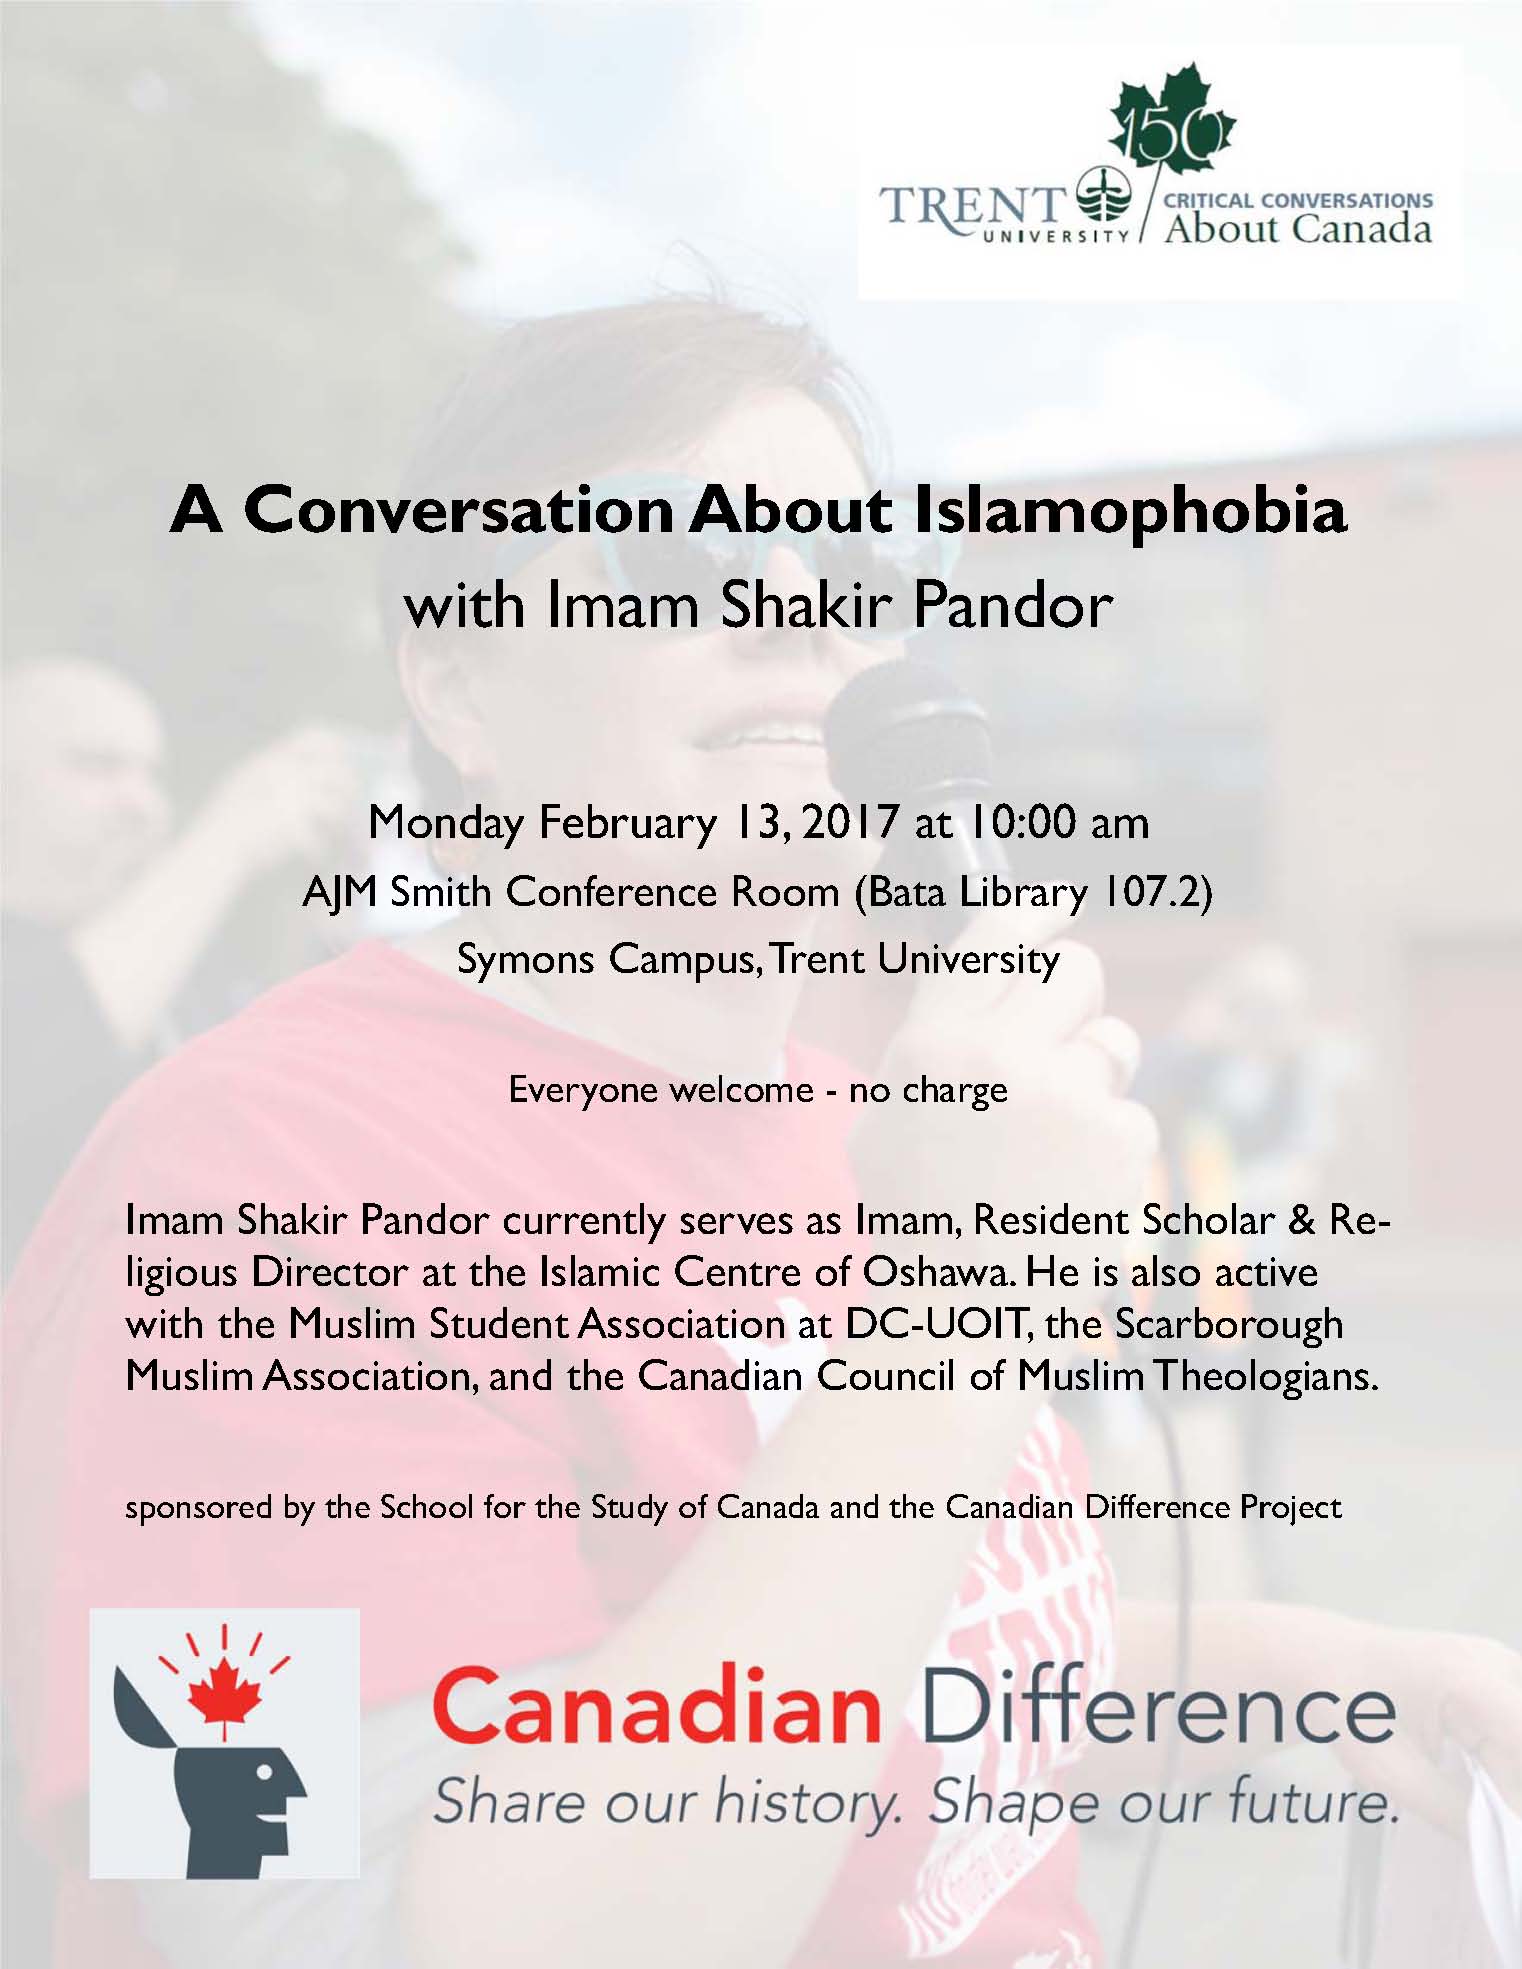 "A Conversation about Islamaphobia" with Imam Shakir Pandor 13 February 2017